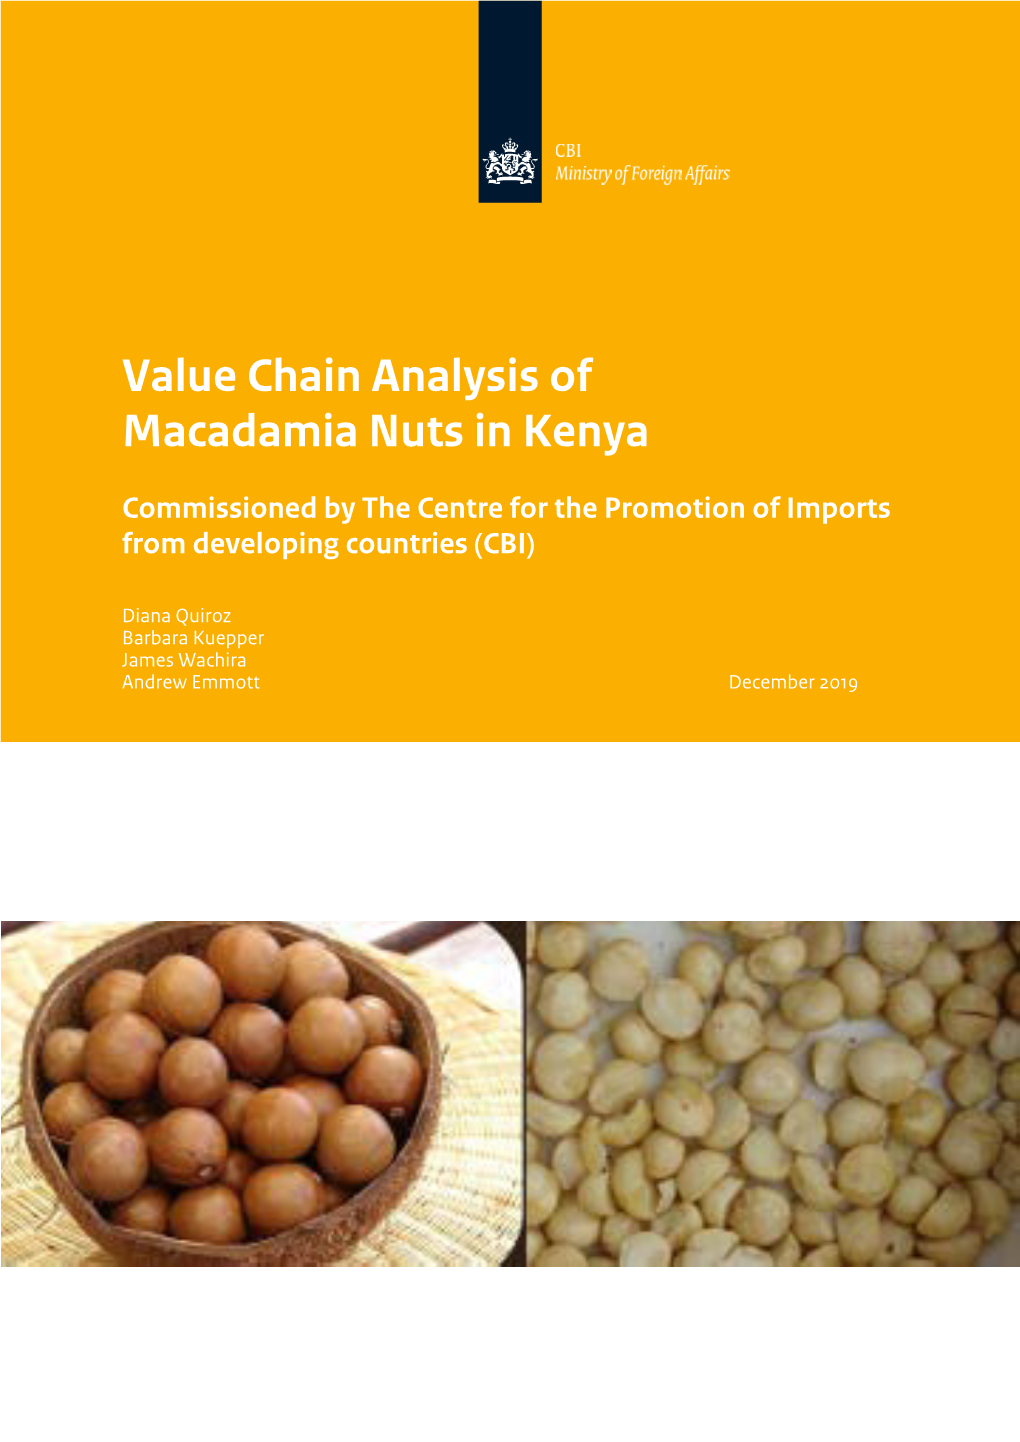 Value Chain Analysis of Macadamia Nuts in Kenya